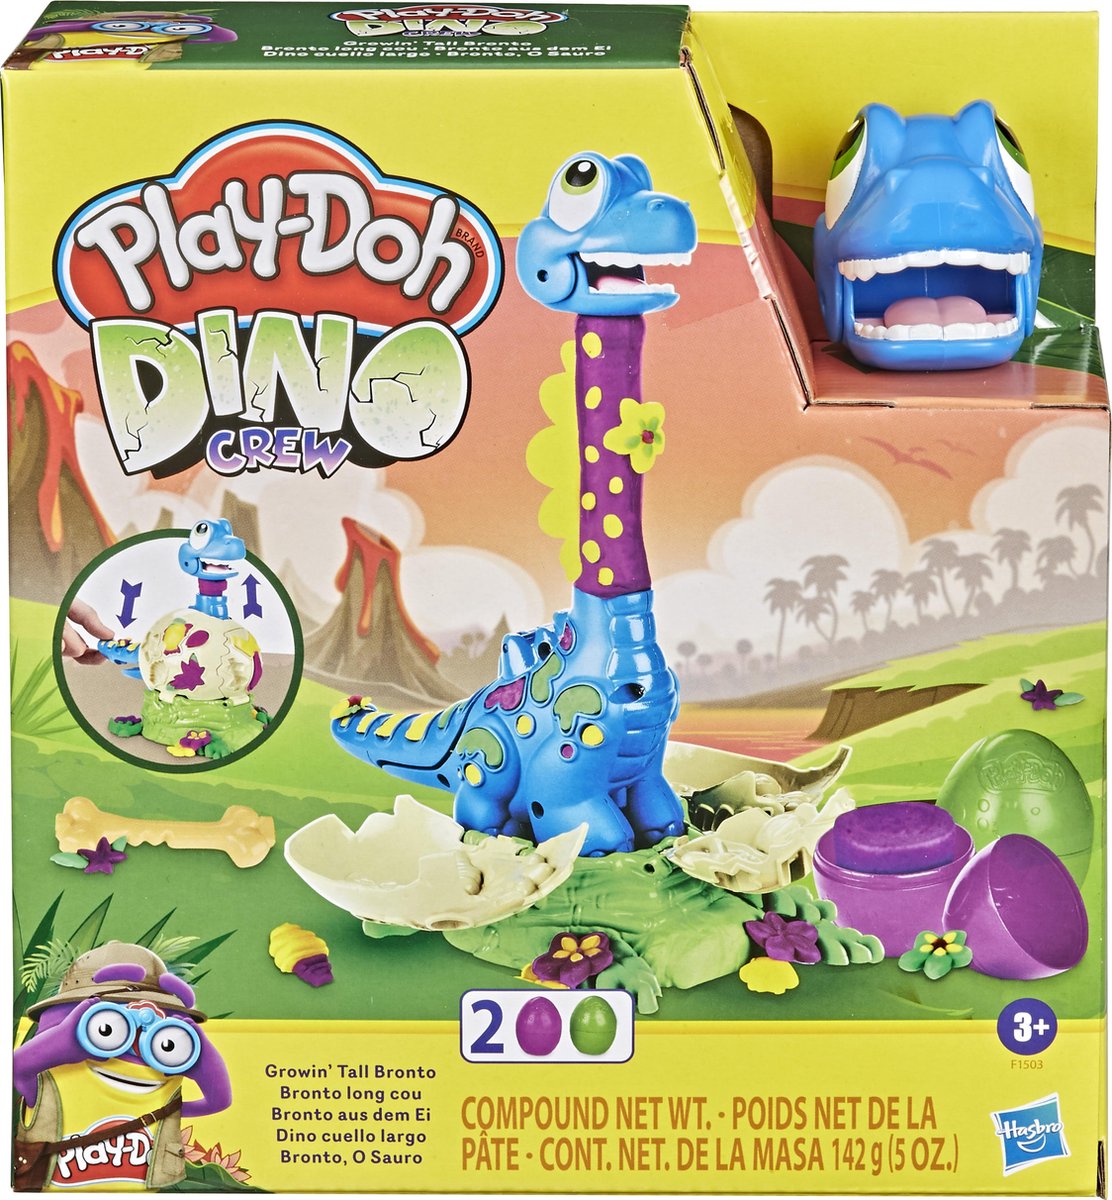 Hasbro Play Doh kleiset Dino Crew Growing Tall Bronto 7 delig